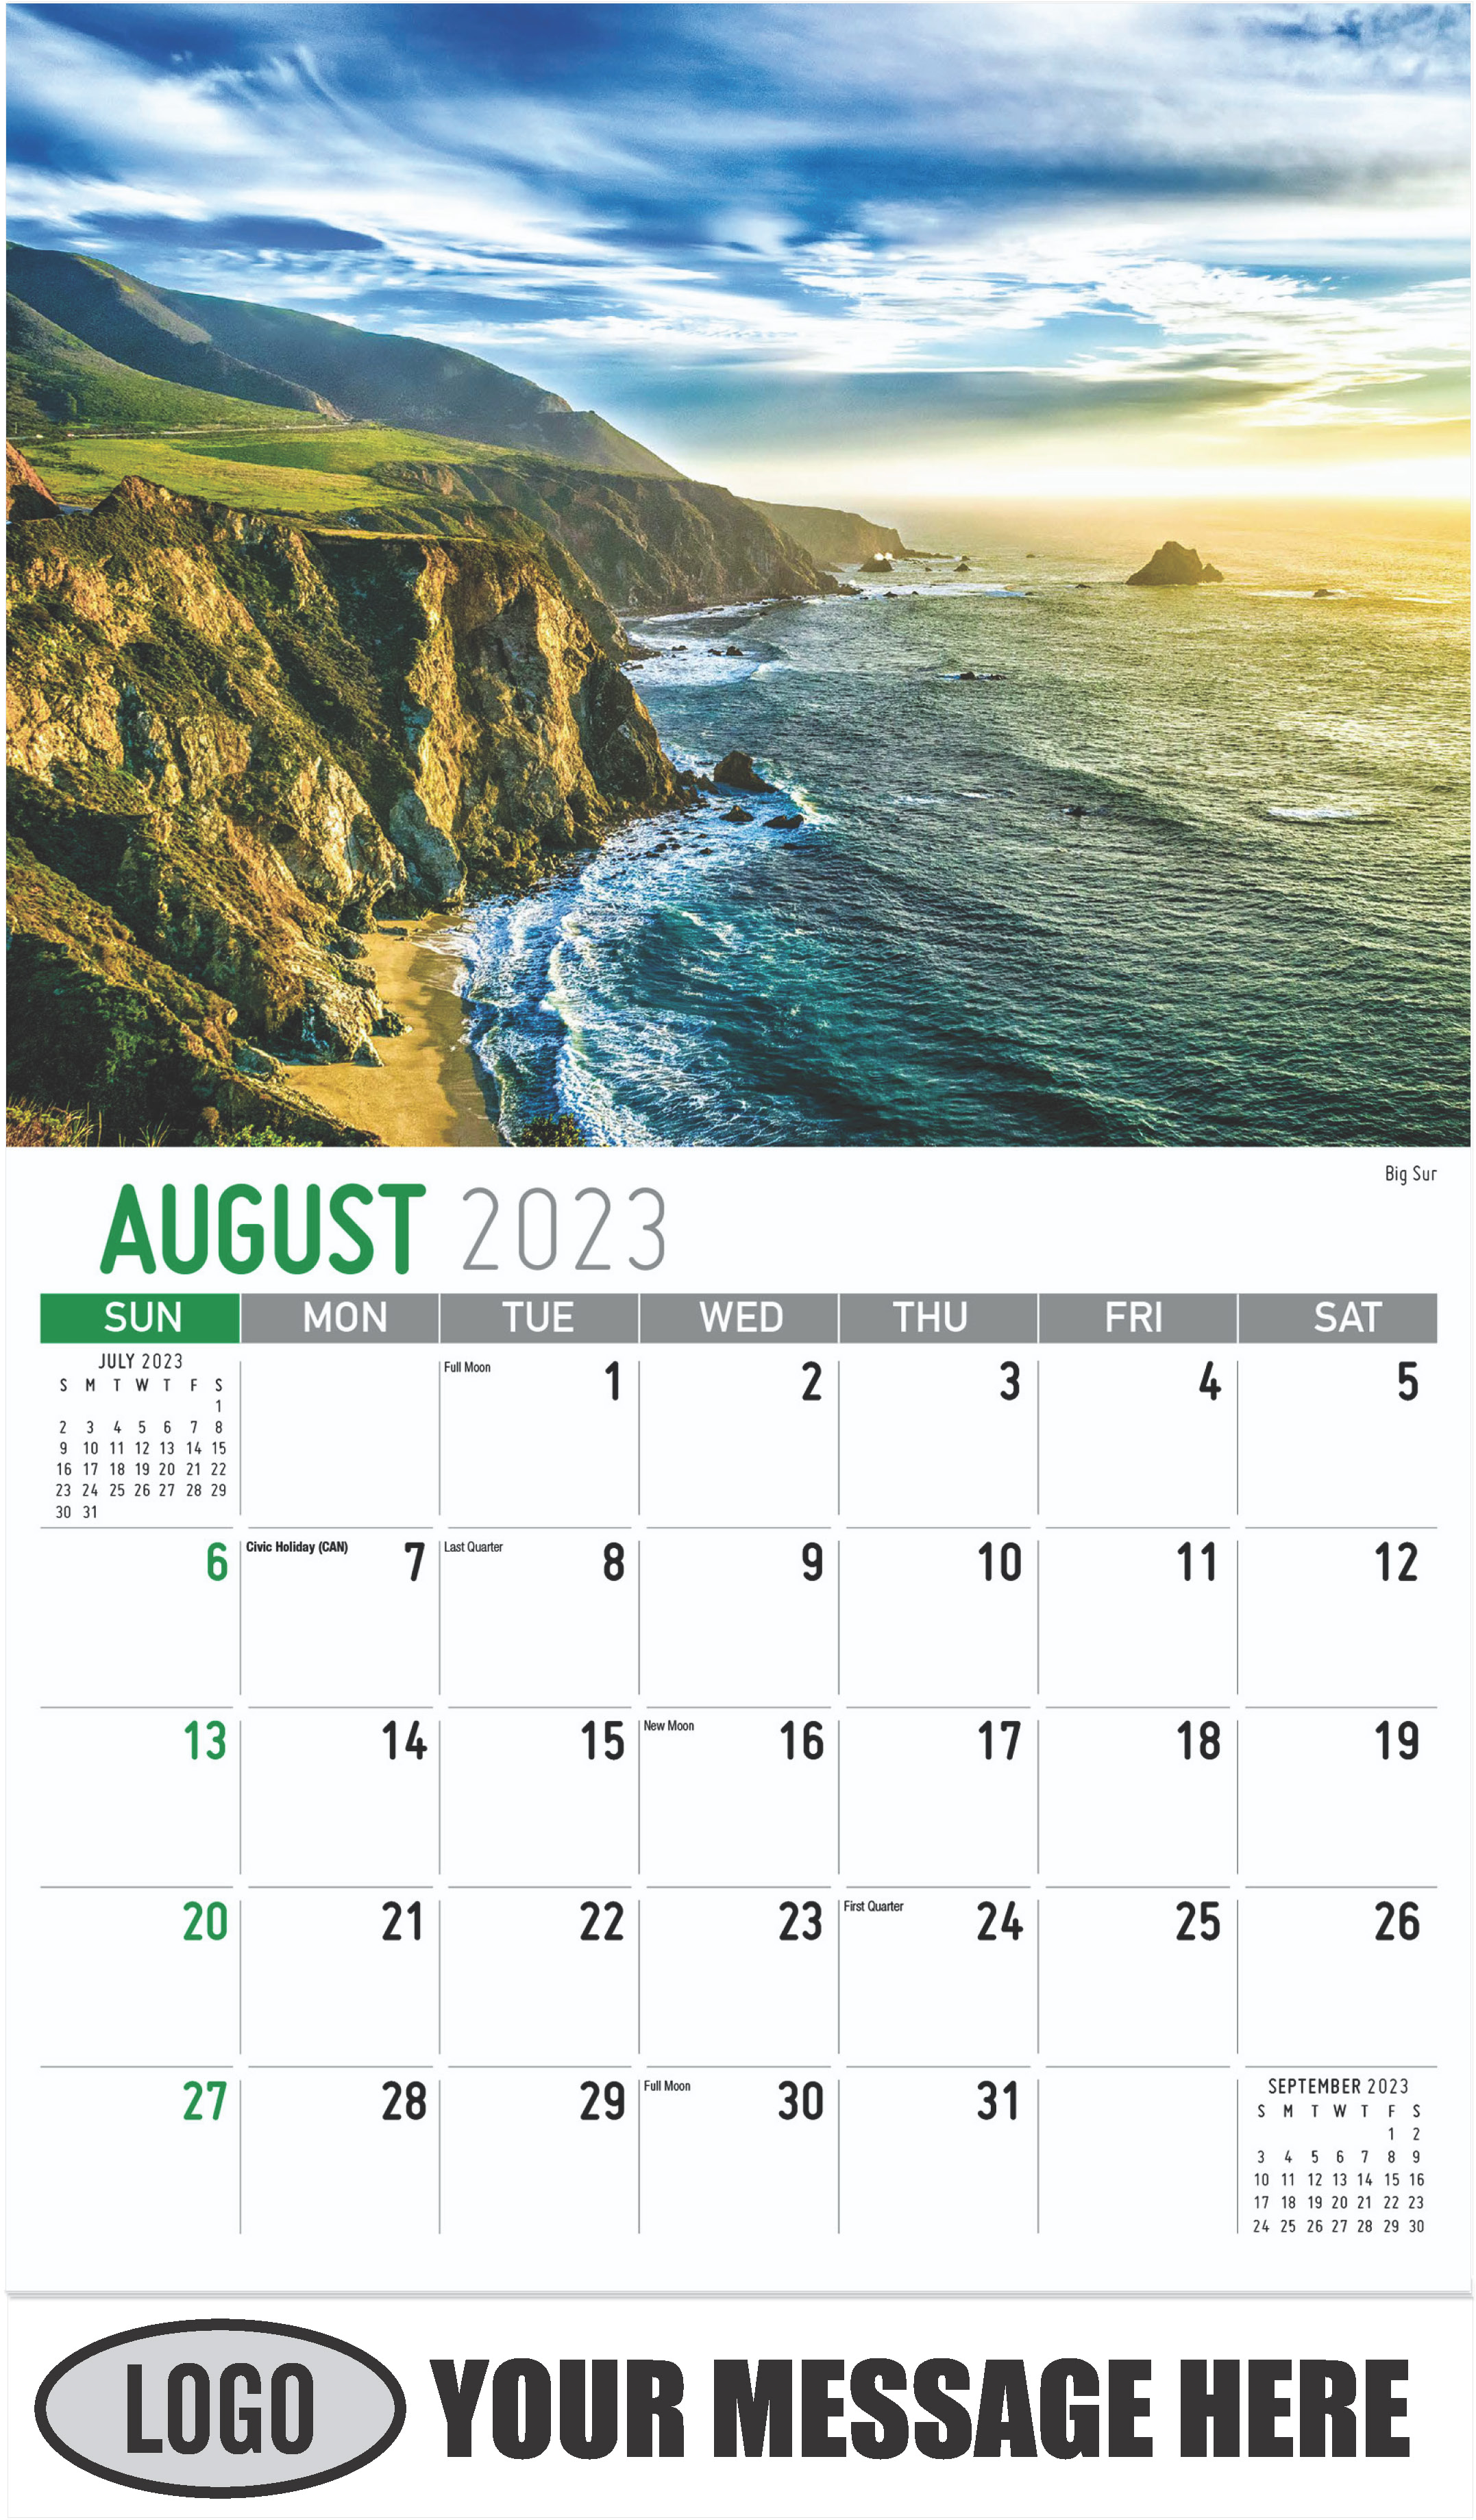 Big Sur - August - Scenes of California 2023 Promotional Calendar